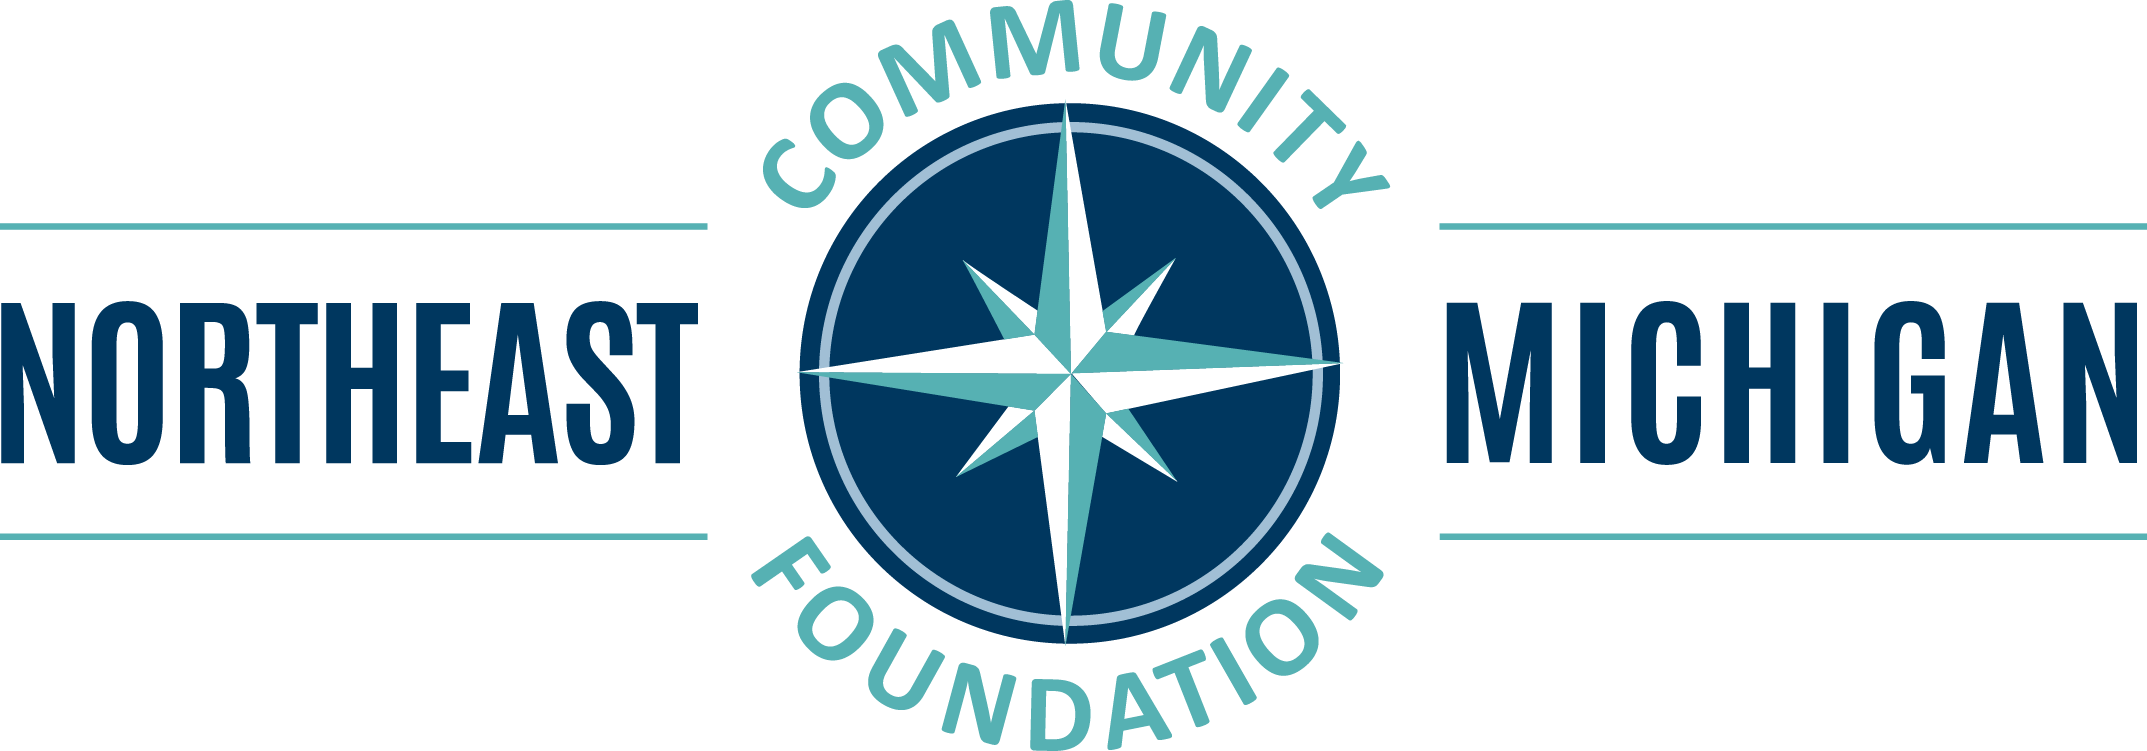 Community Foundation for Northeast Michigan